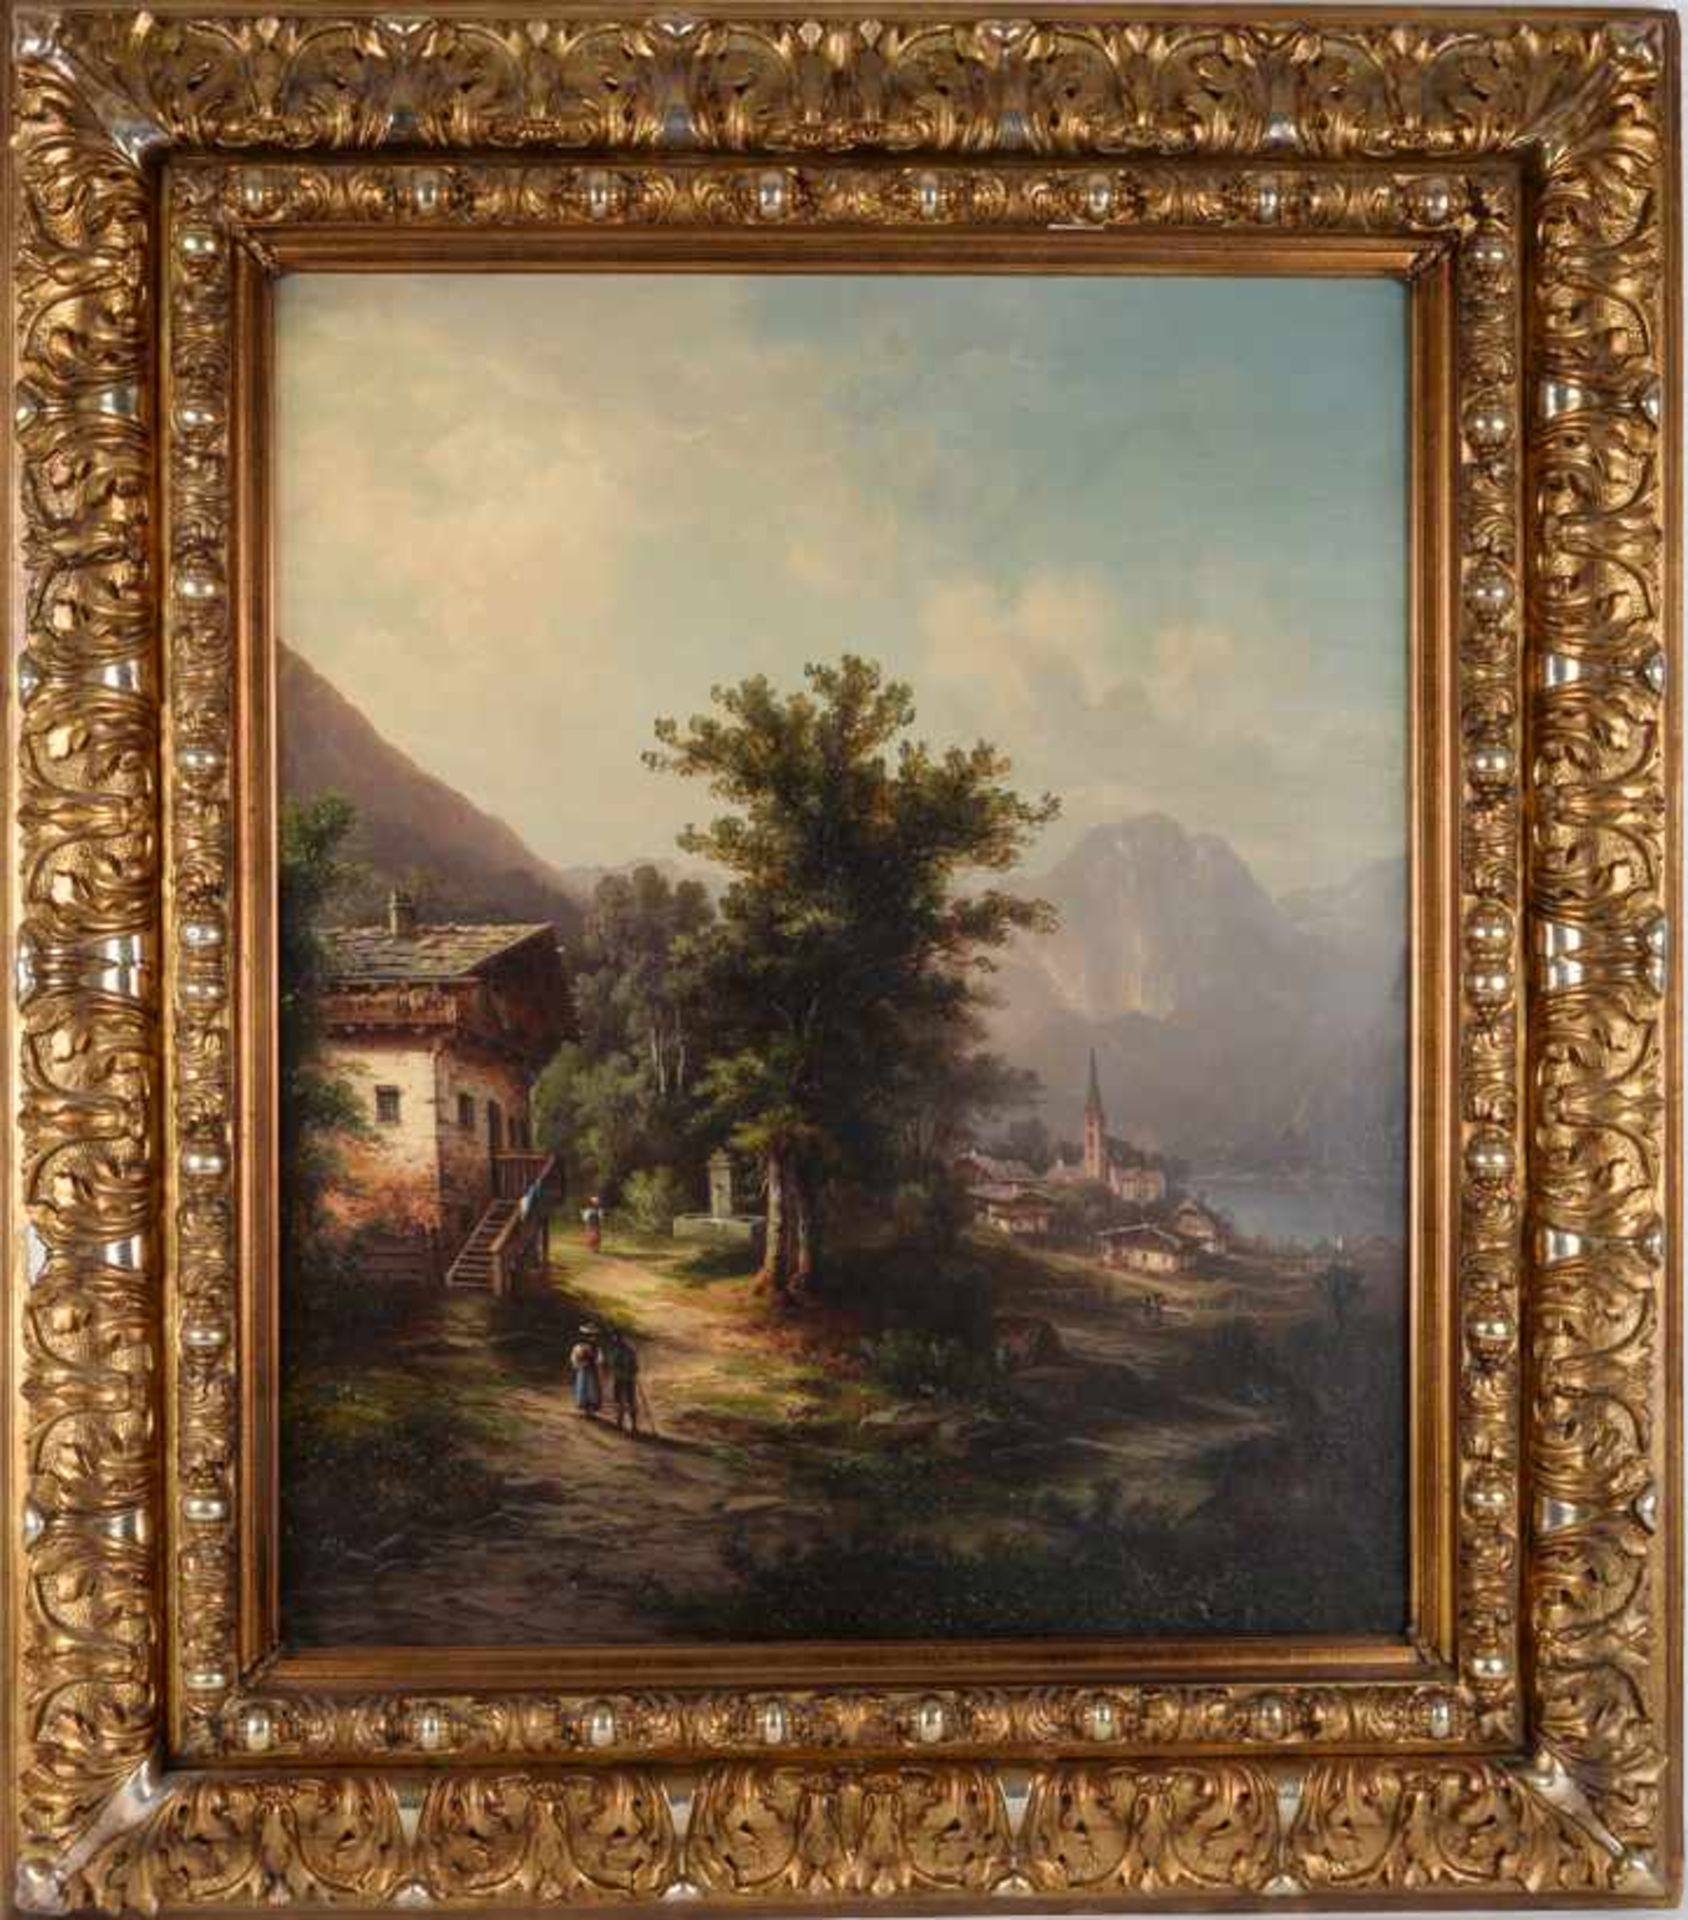 Romantische Landschaft, signiert J. August. Öl auf Leinwand, Datierung um 1870, unten links